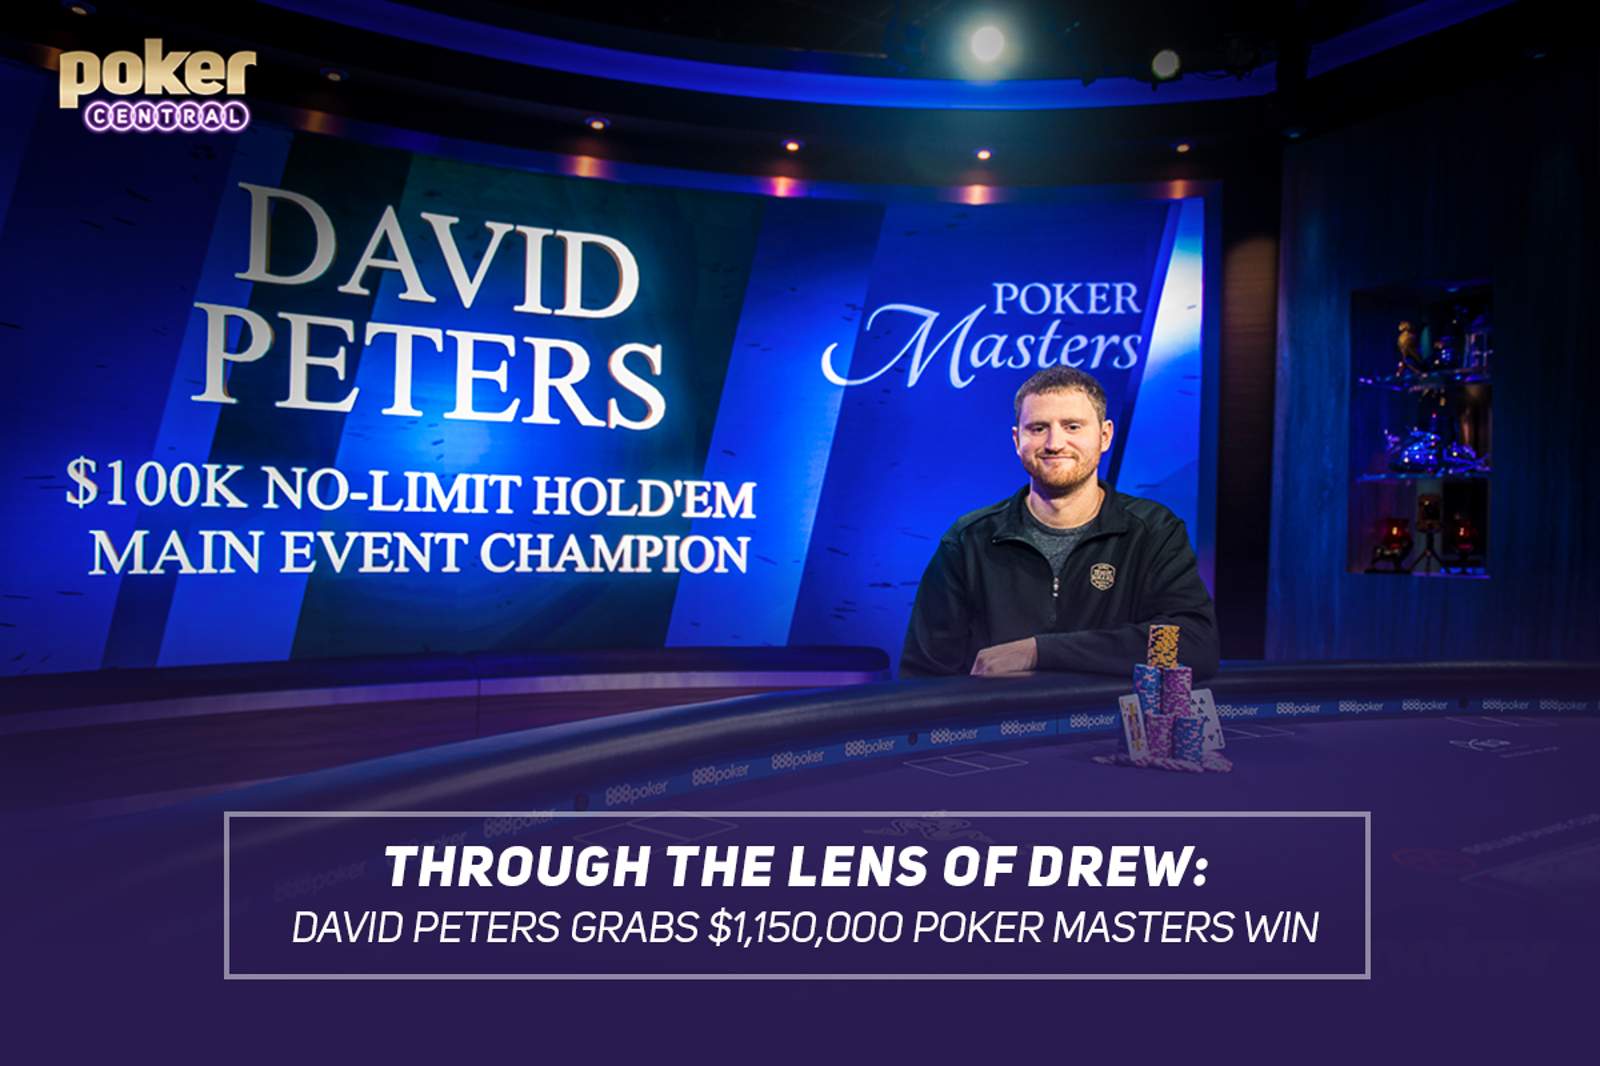 Through the Lens of Drew - David Peters Grabs $1,150,000 Poker Masters Win